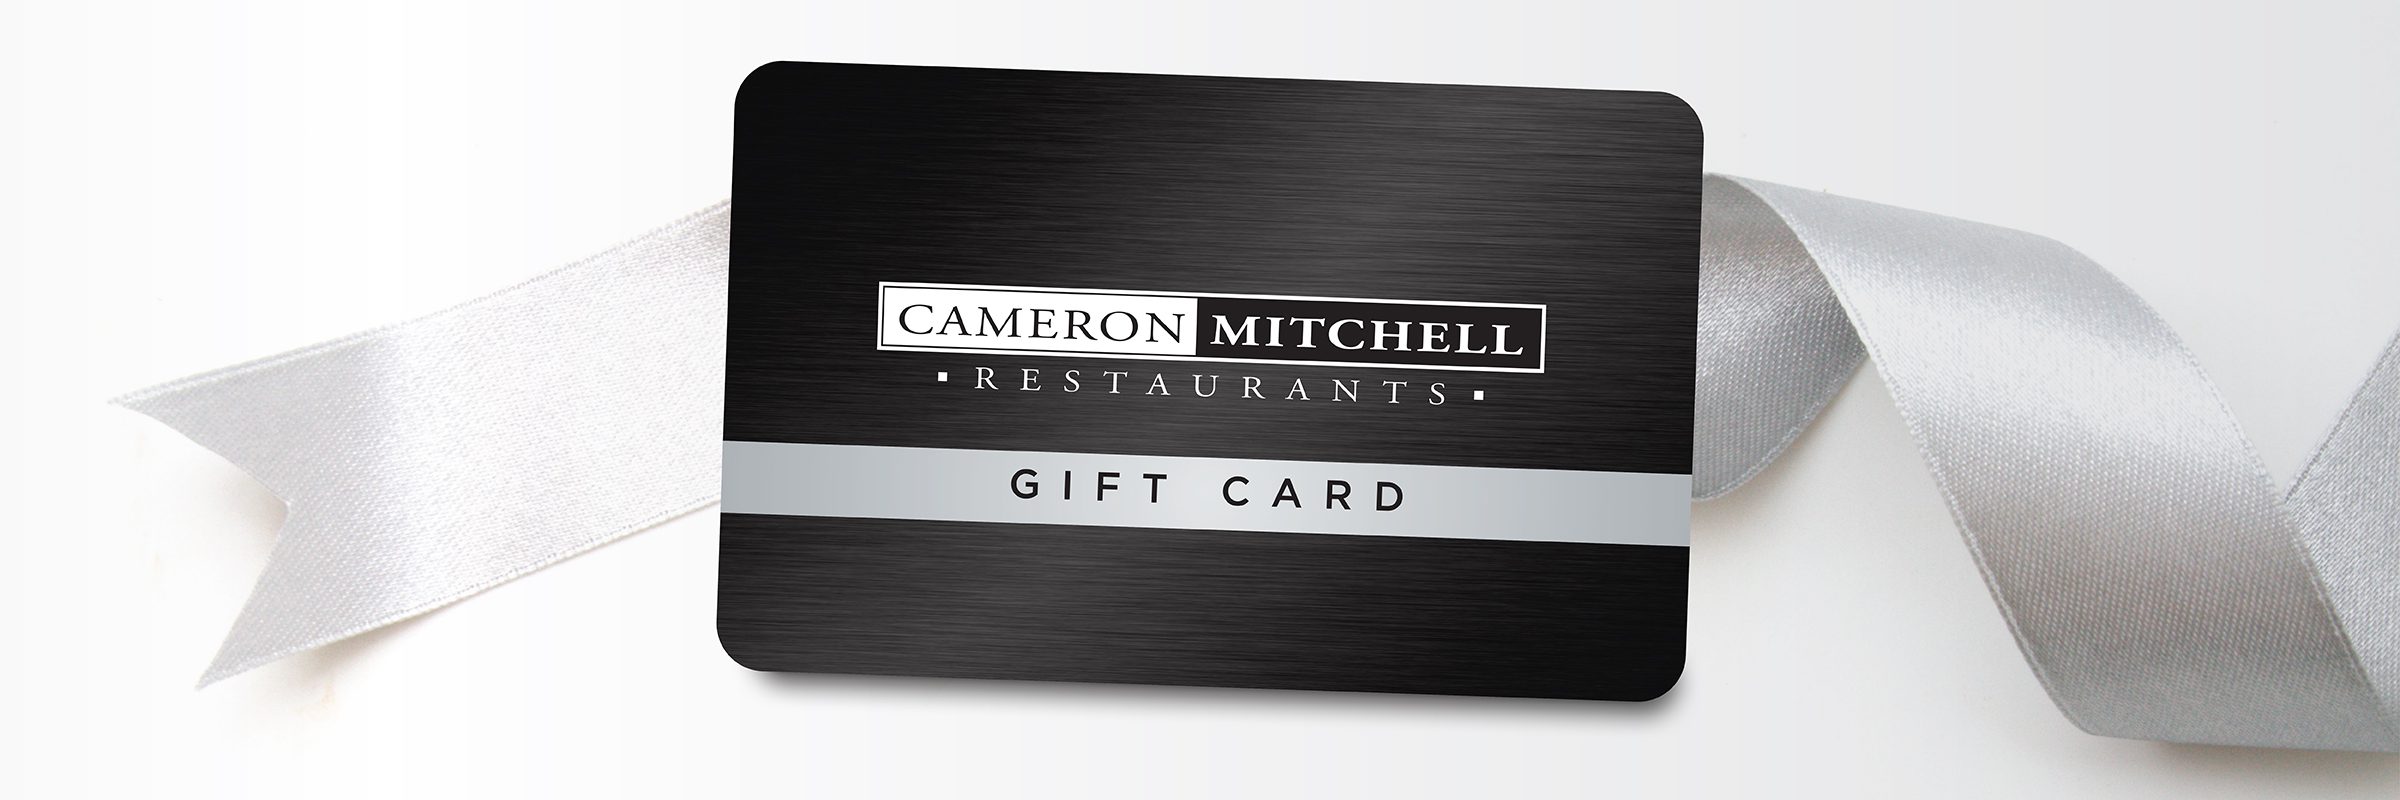 Cameron Mitchell Restaurants | Gift Card Website | Switchbox, Inc.